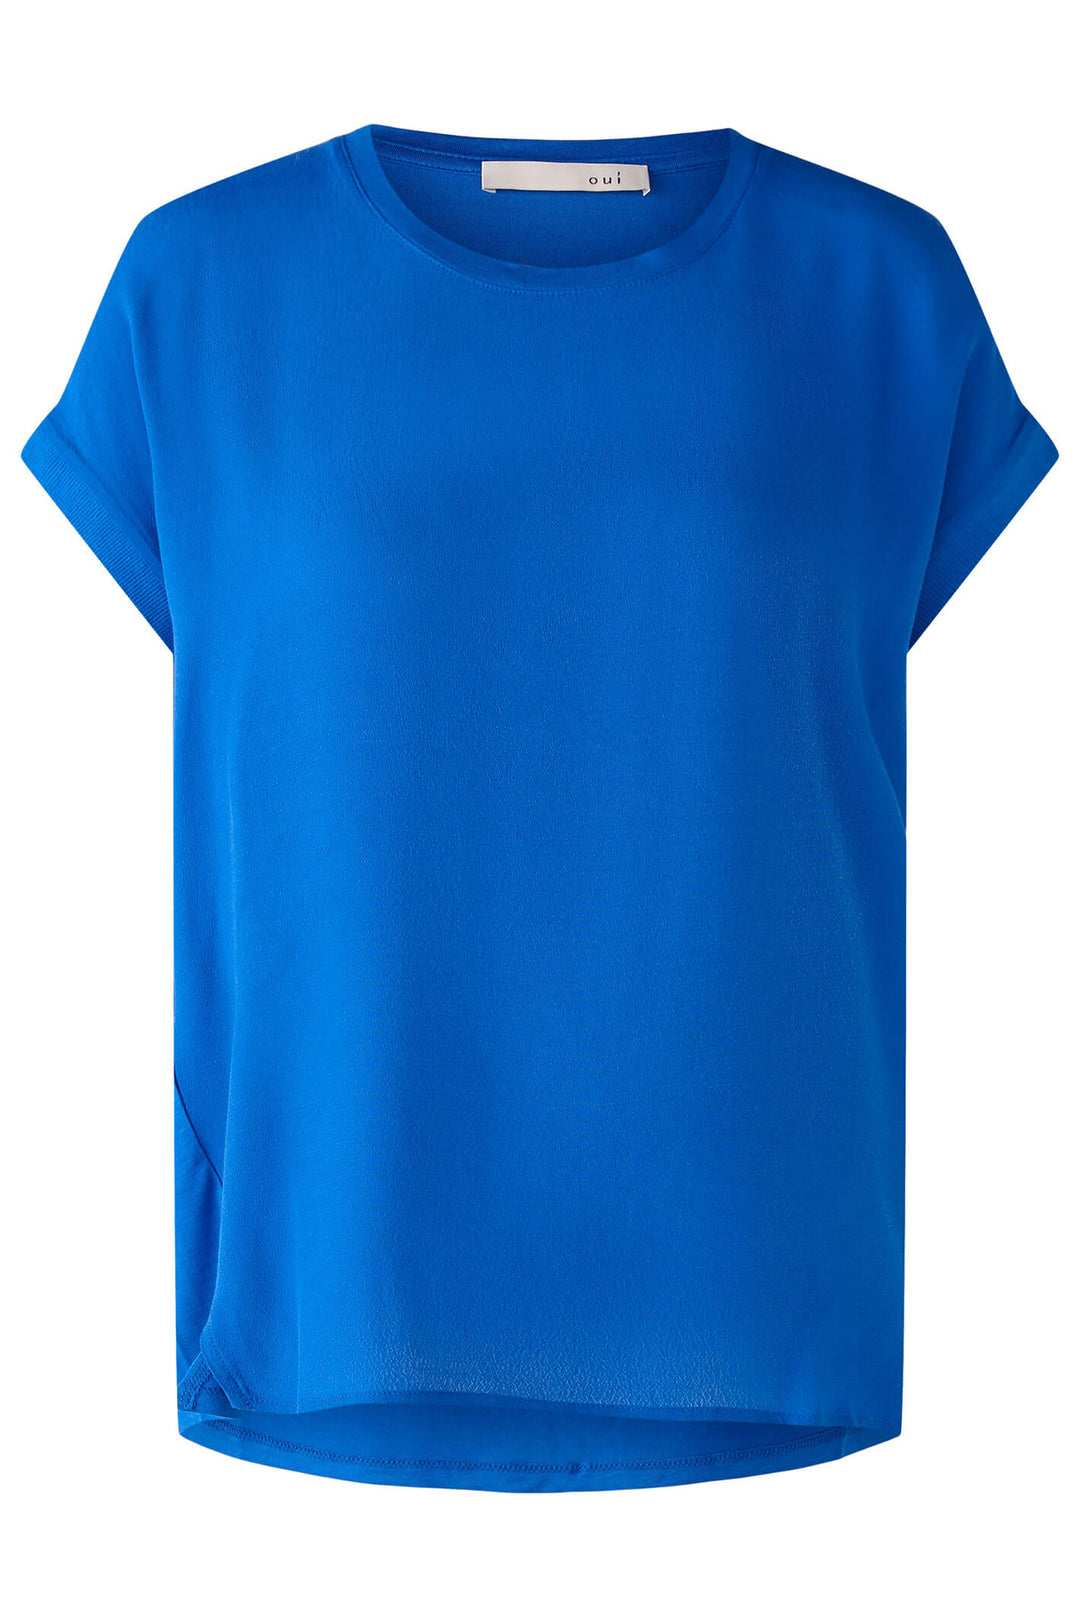 Oui 79015 Blue Lolite Short Sleeve Top - Olivia Grace Fashion